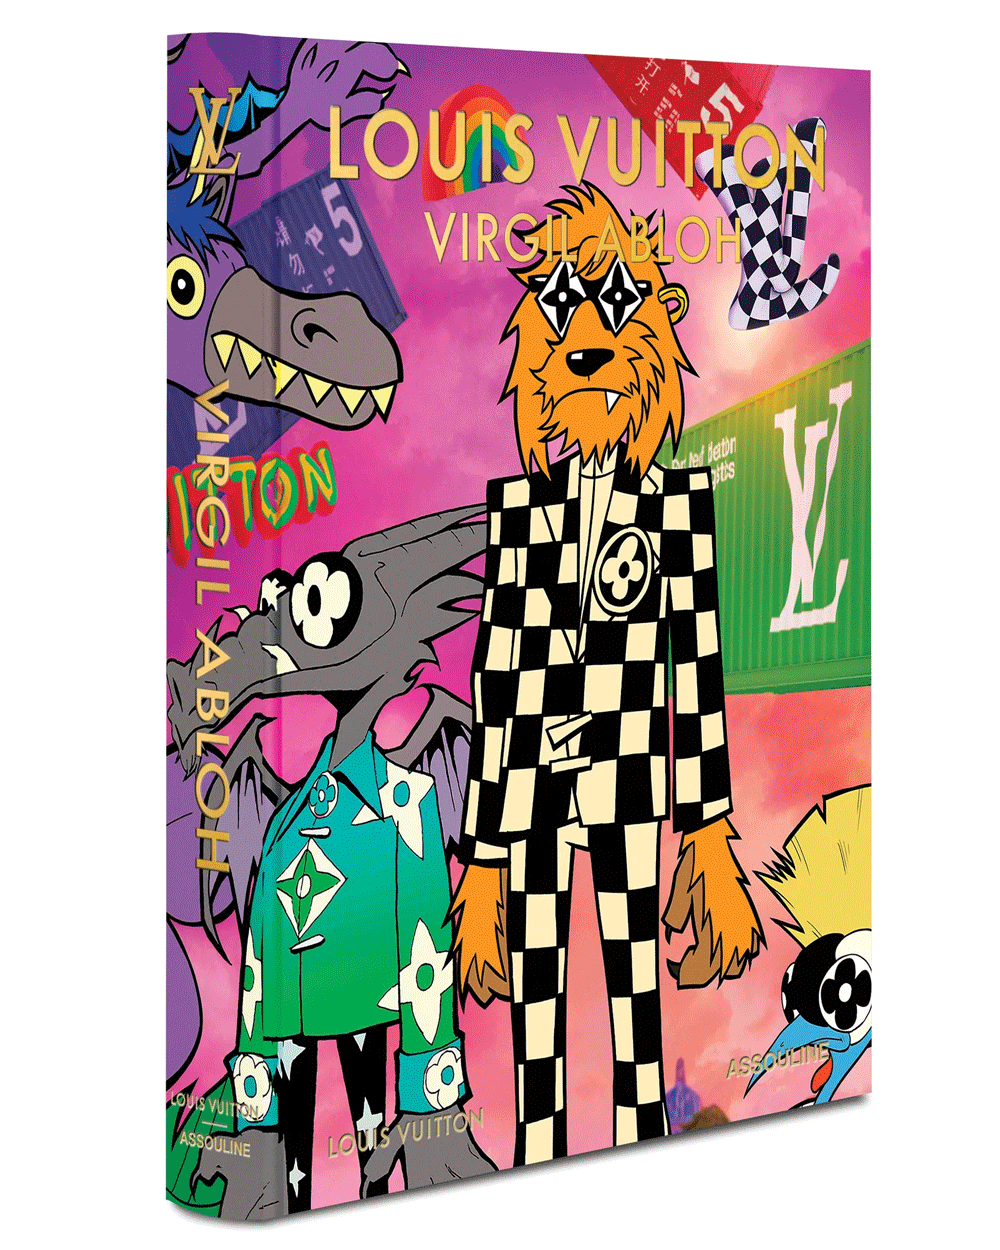 Louis Vuitton: Virgil Abloh with Cartoon Cover Book